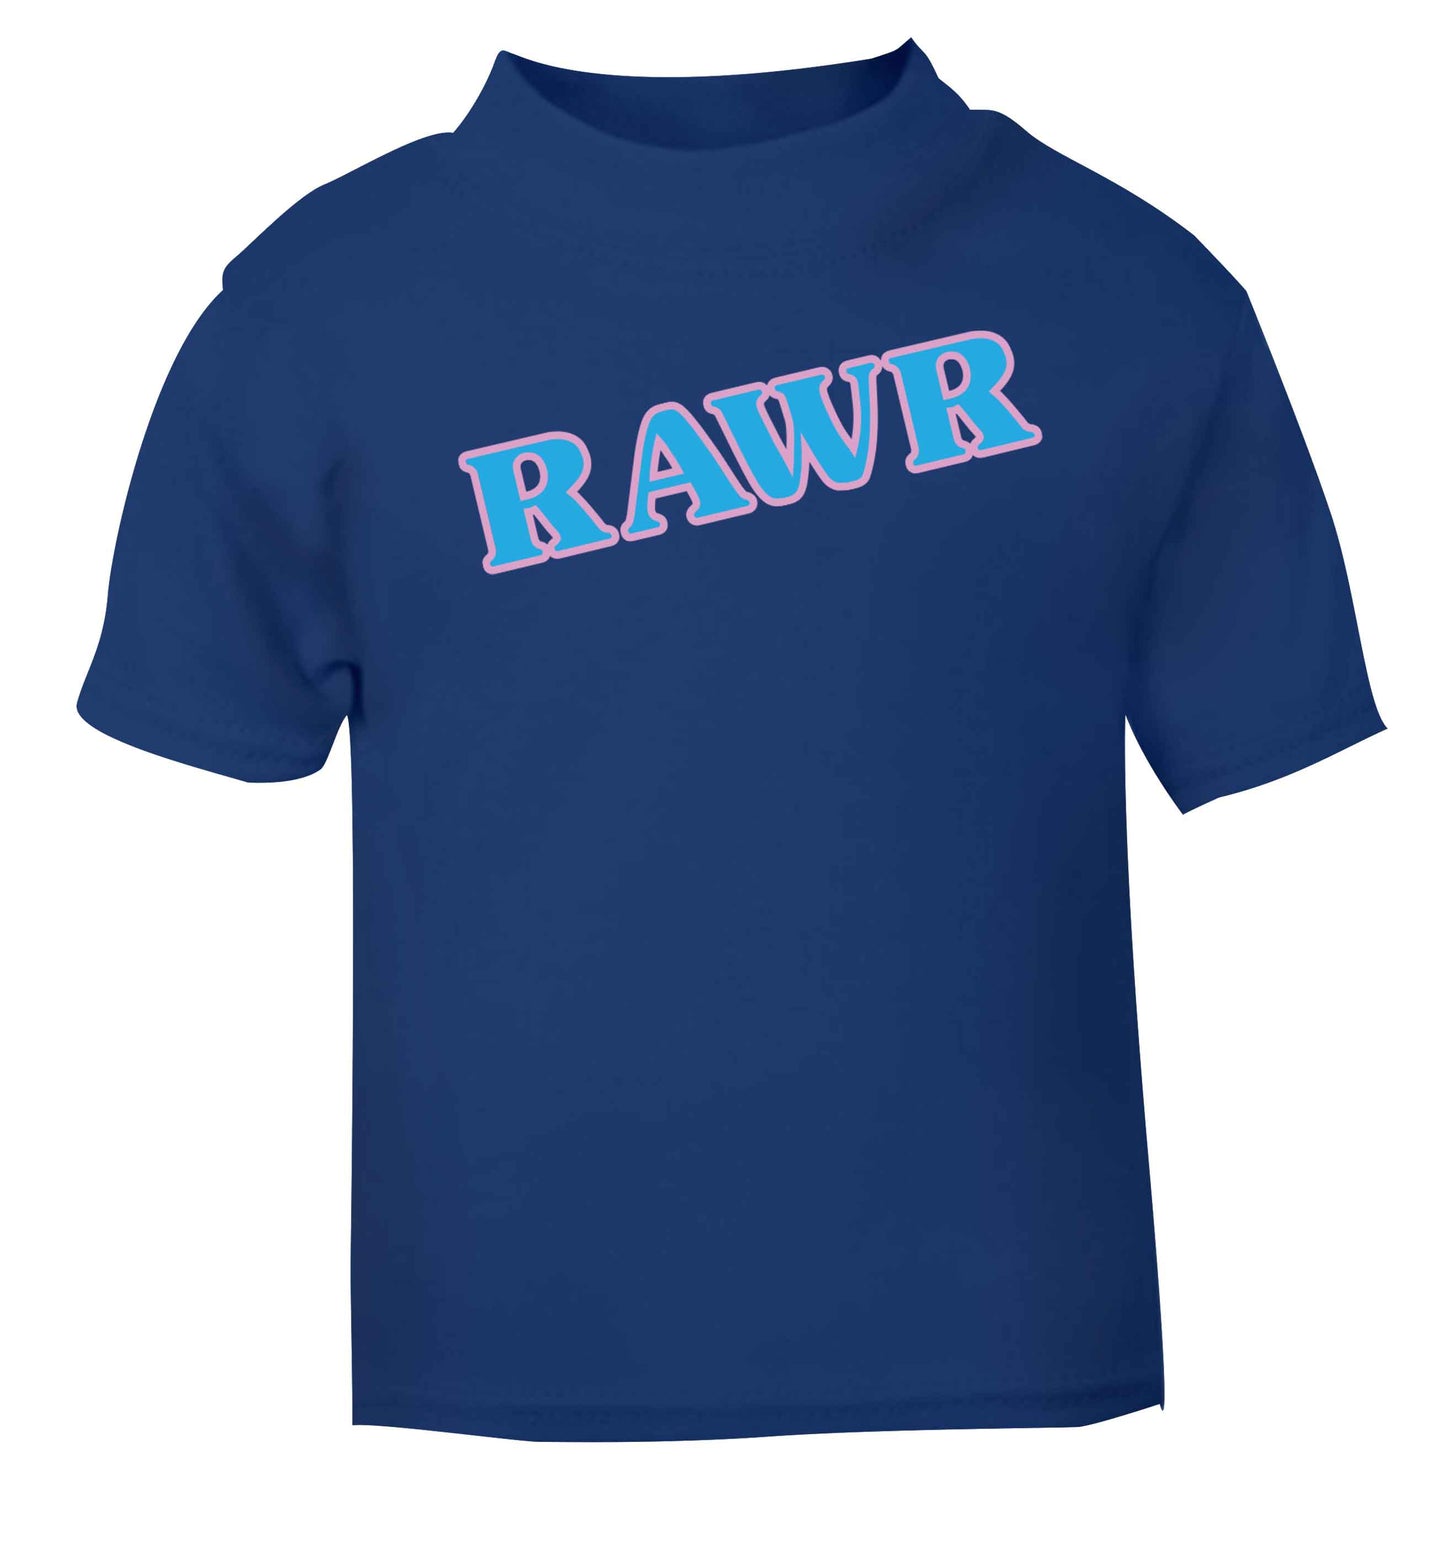 Rawr blue baby toddler Tshirt 2 Years